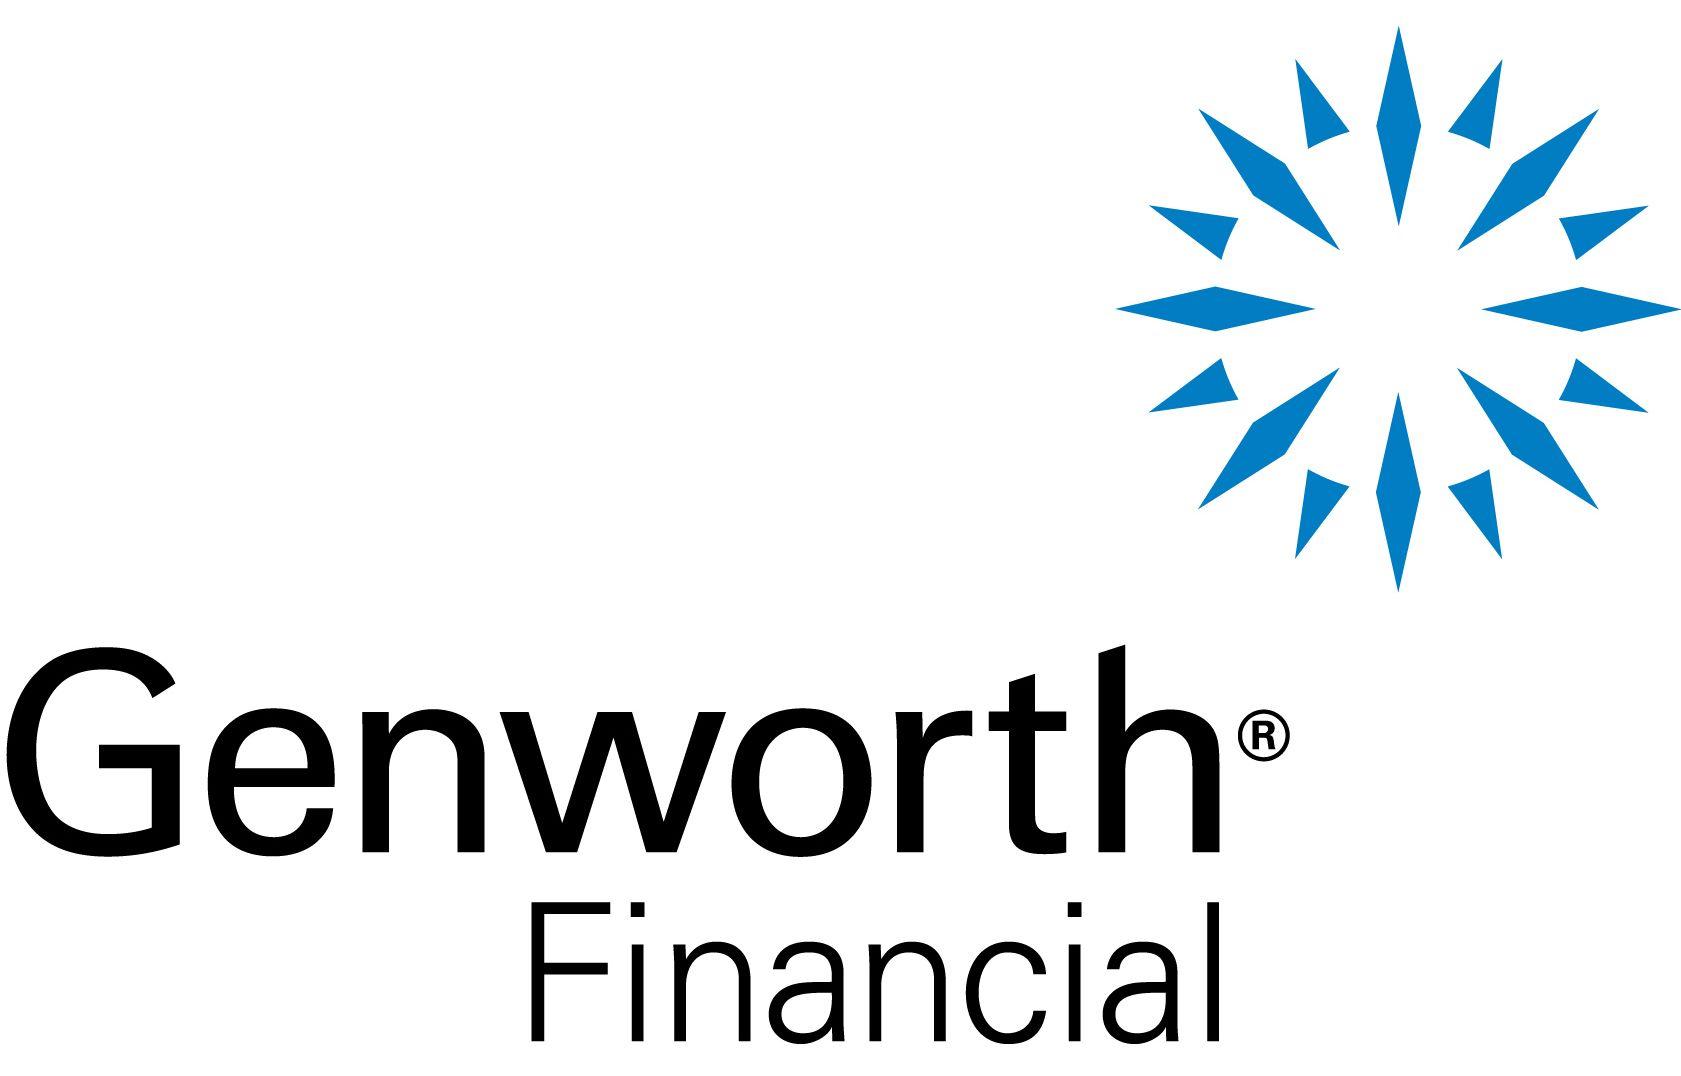 Genworth Financial Logo - American Independent Marketinggenworth - American Independent Marketing